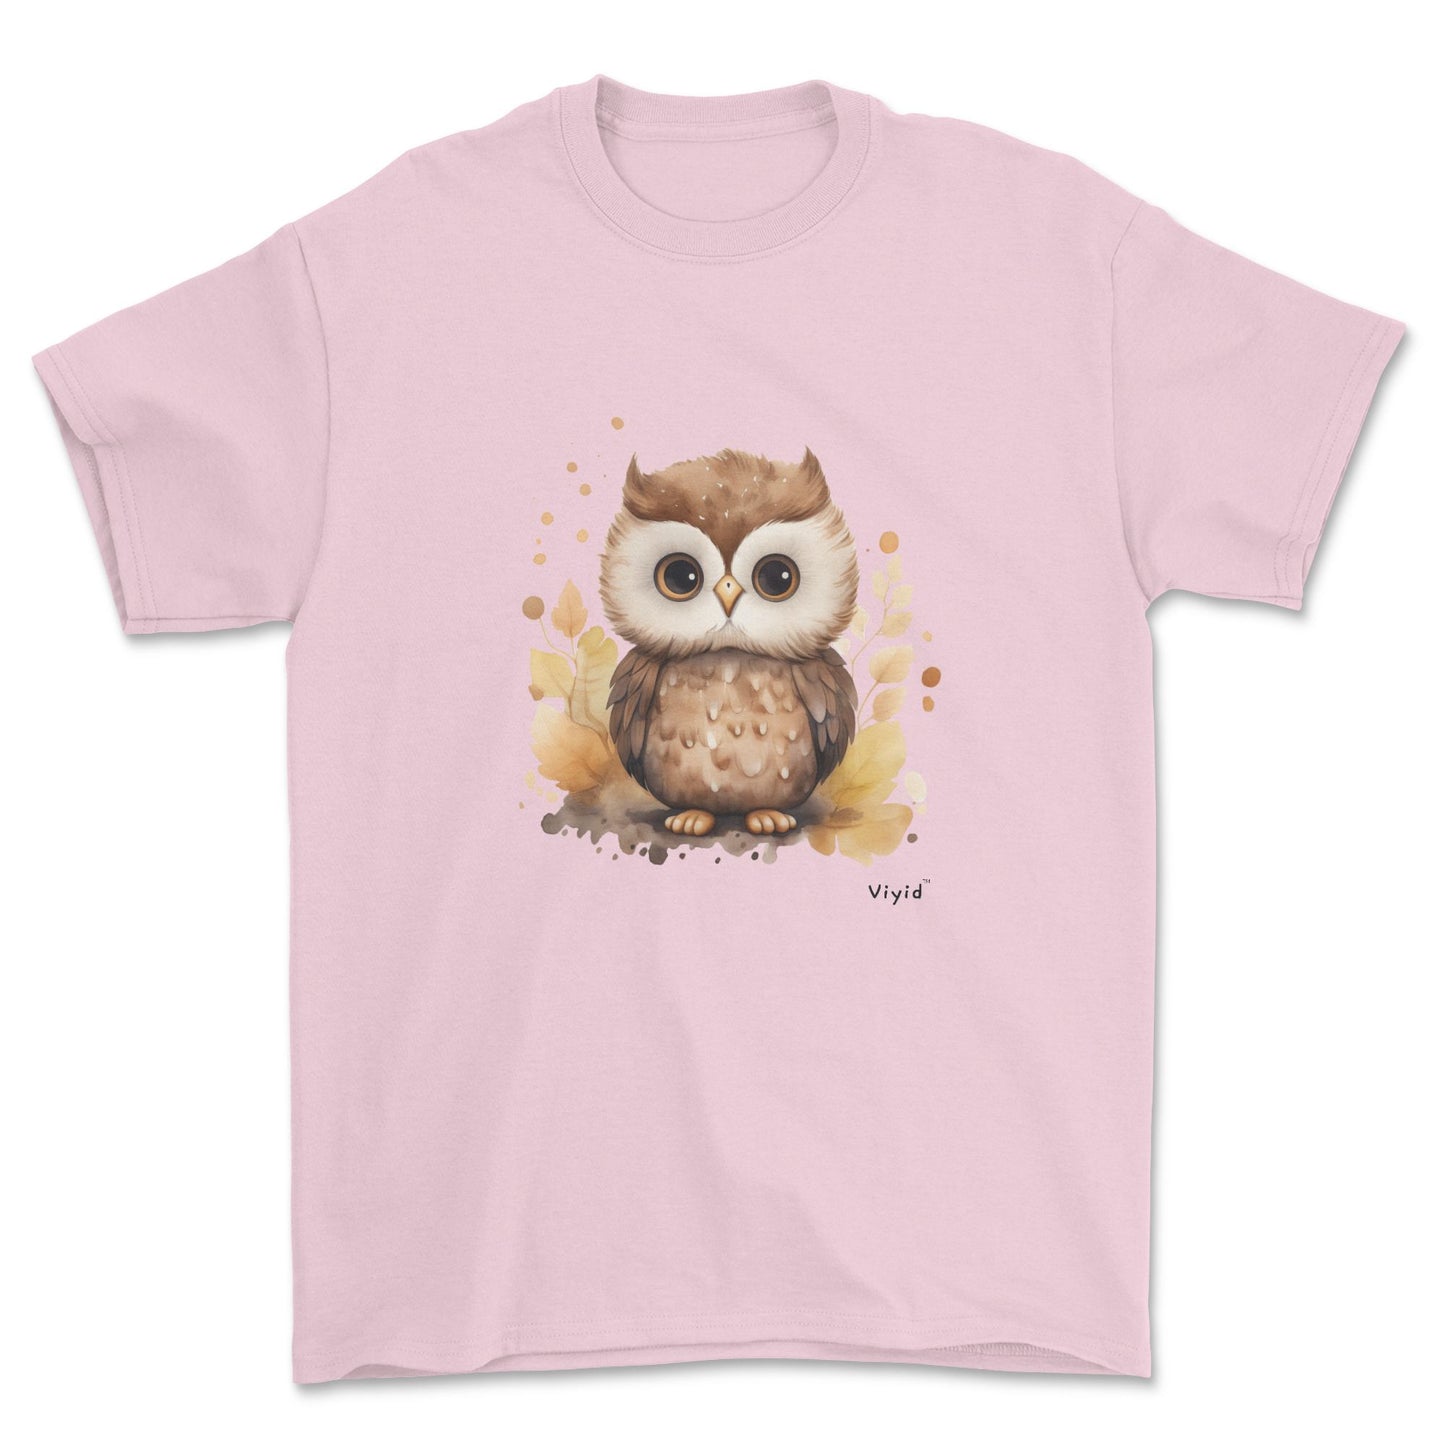 nocturnal owl adult t-shirt light pink